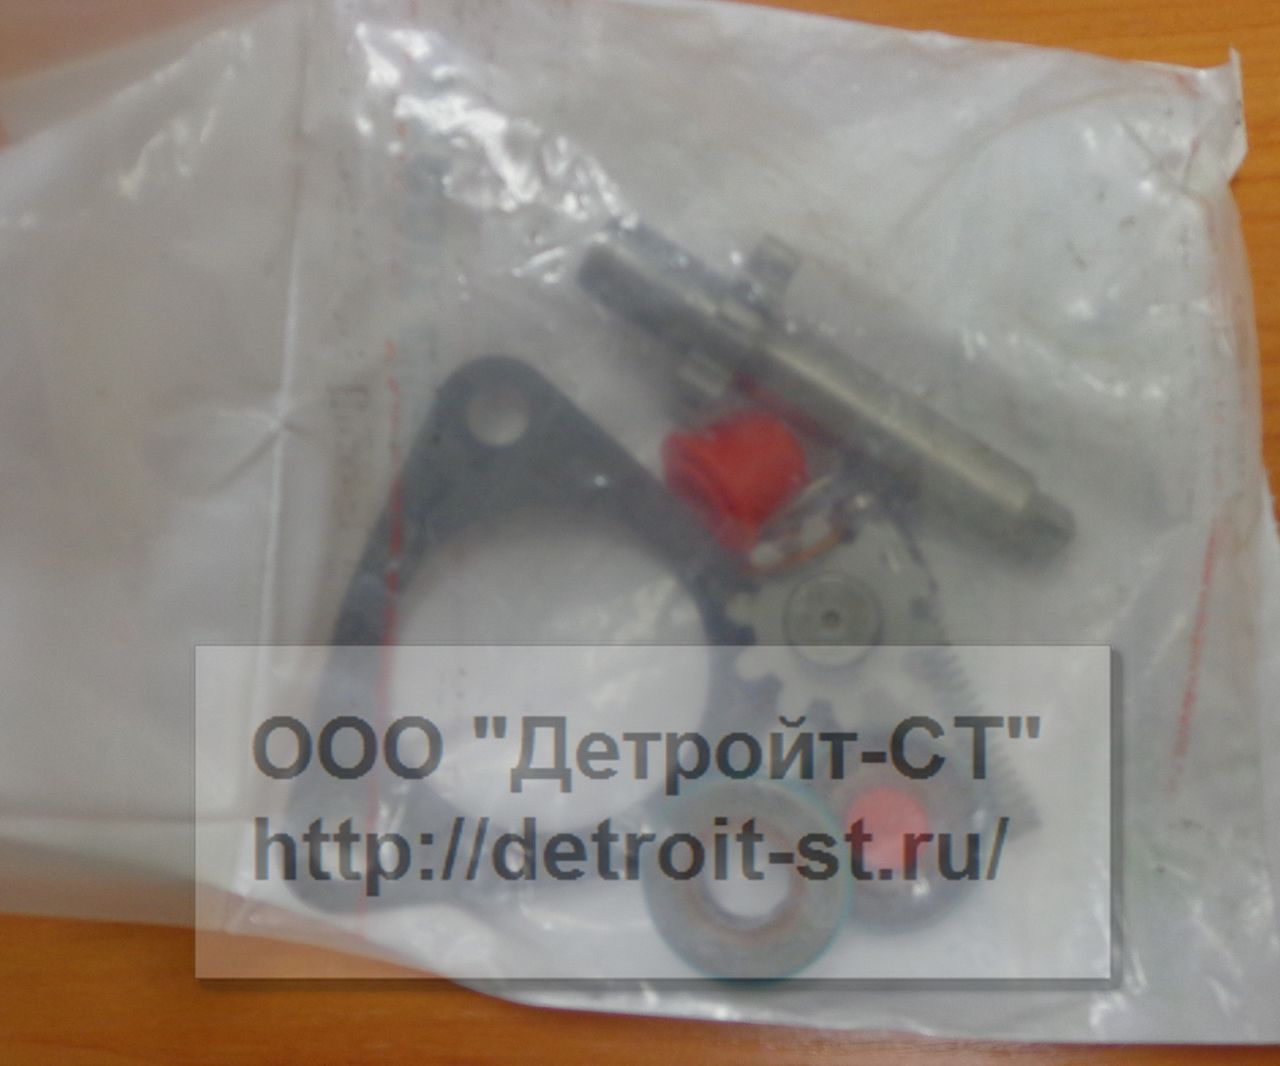 Ремкомплект насоса Detroit Diesel 53 series 5195078 (PC-5195078) фото запчасти